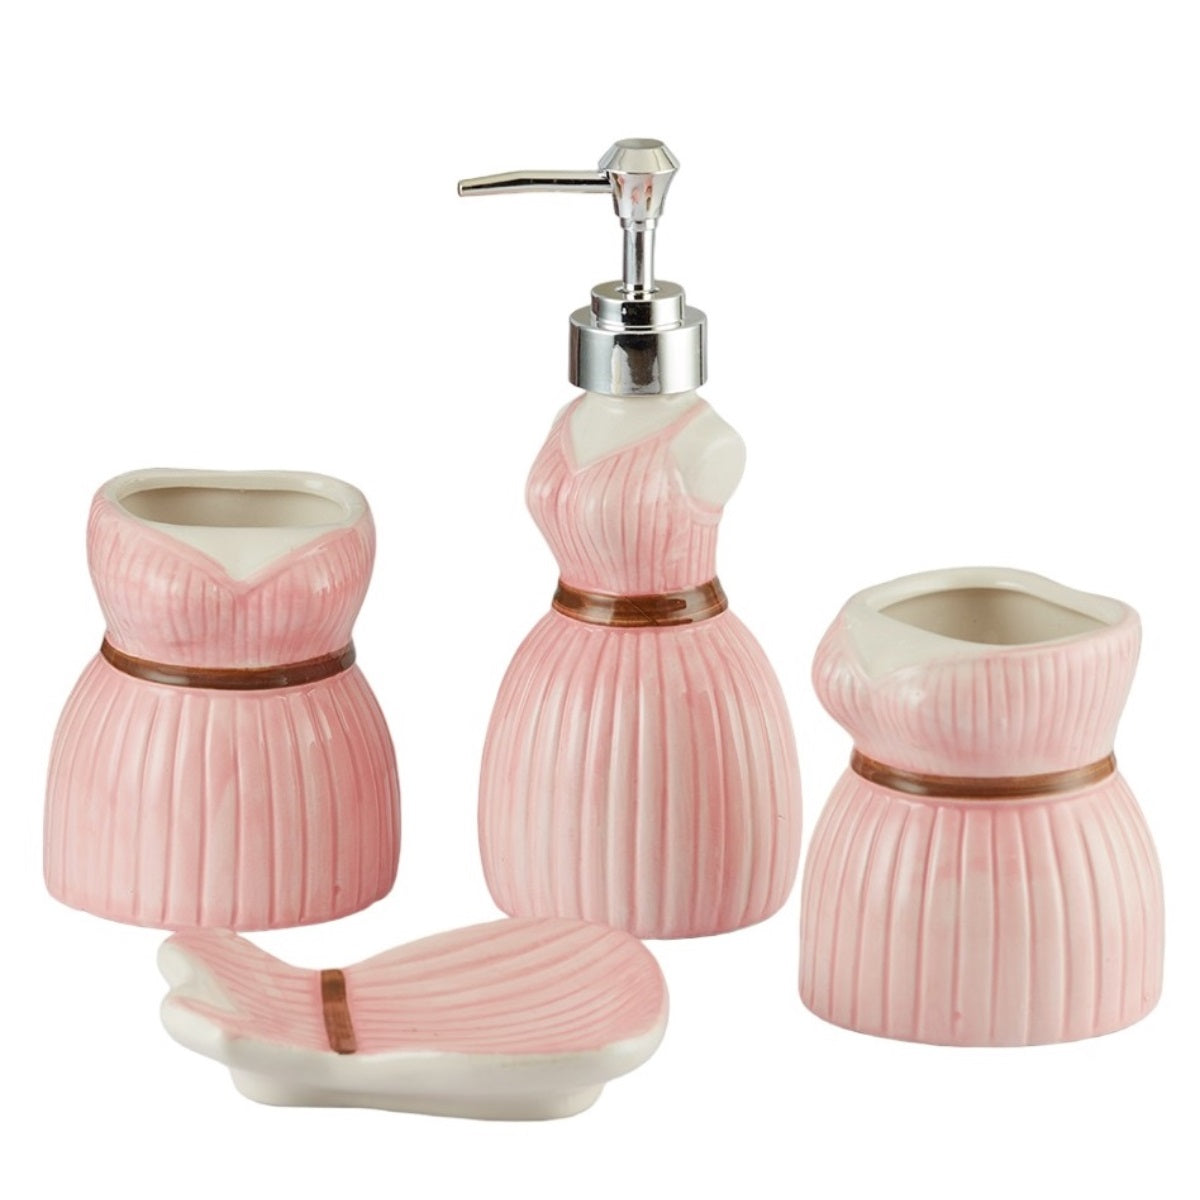 Ceramic Bathroom Accessories Set of 4 Bath Set with Soap Dispenser (9895)